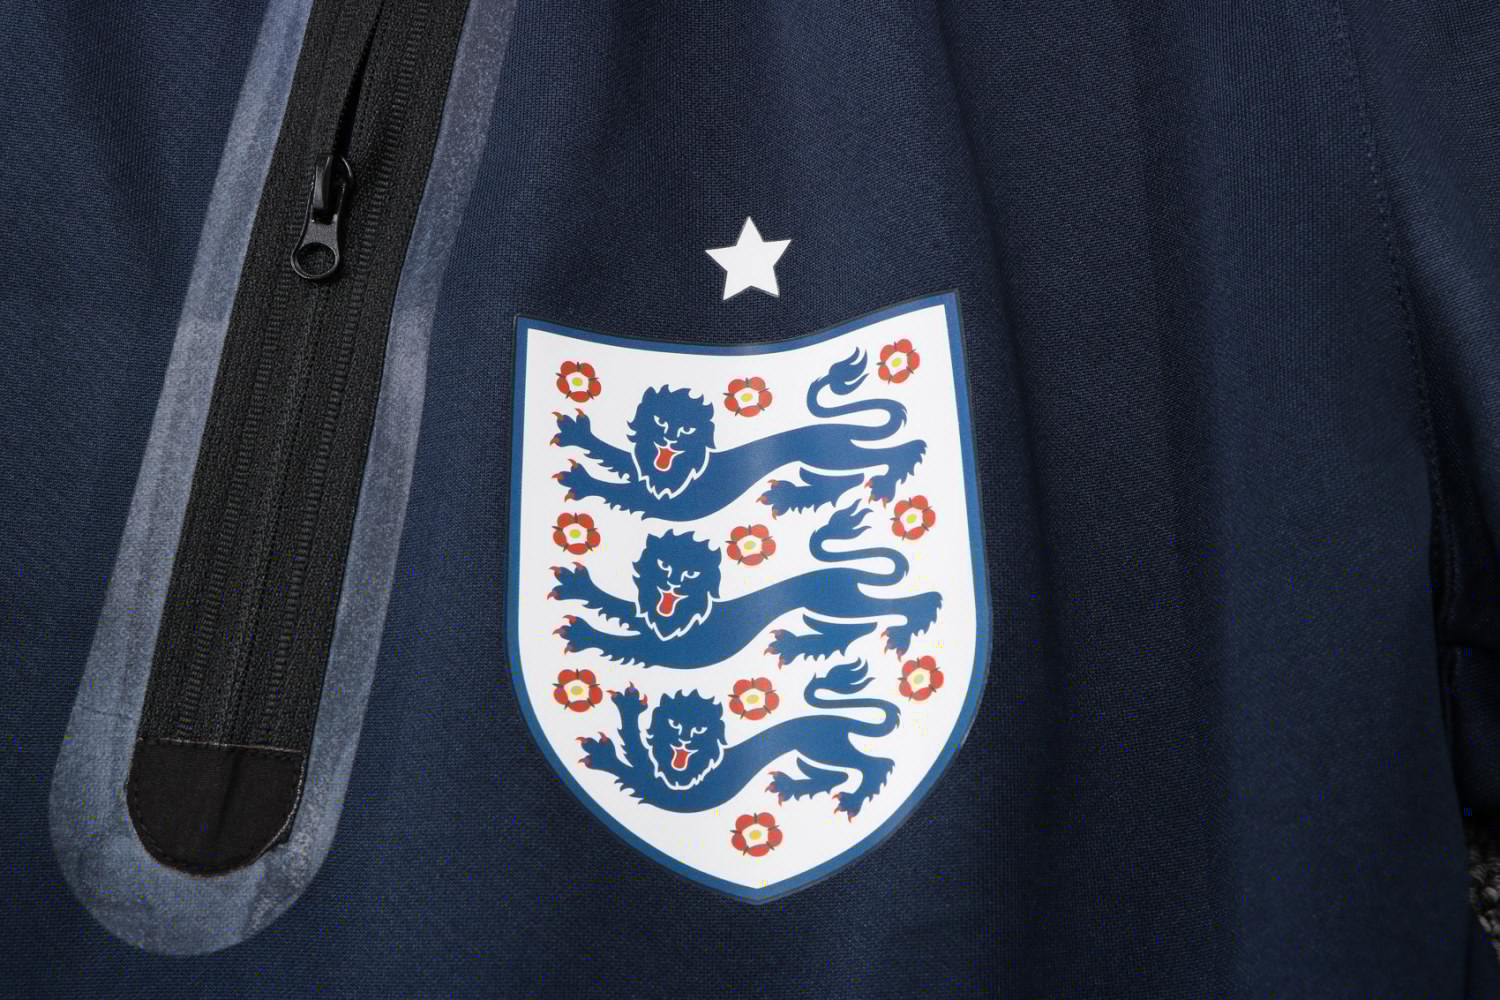 England Soccer Training Suit Jacket + Pants Hoodie Royal Mens 2022